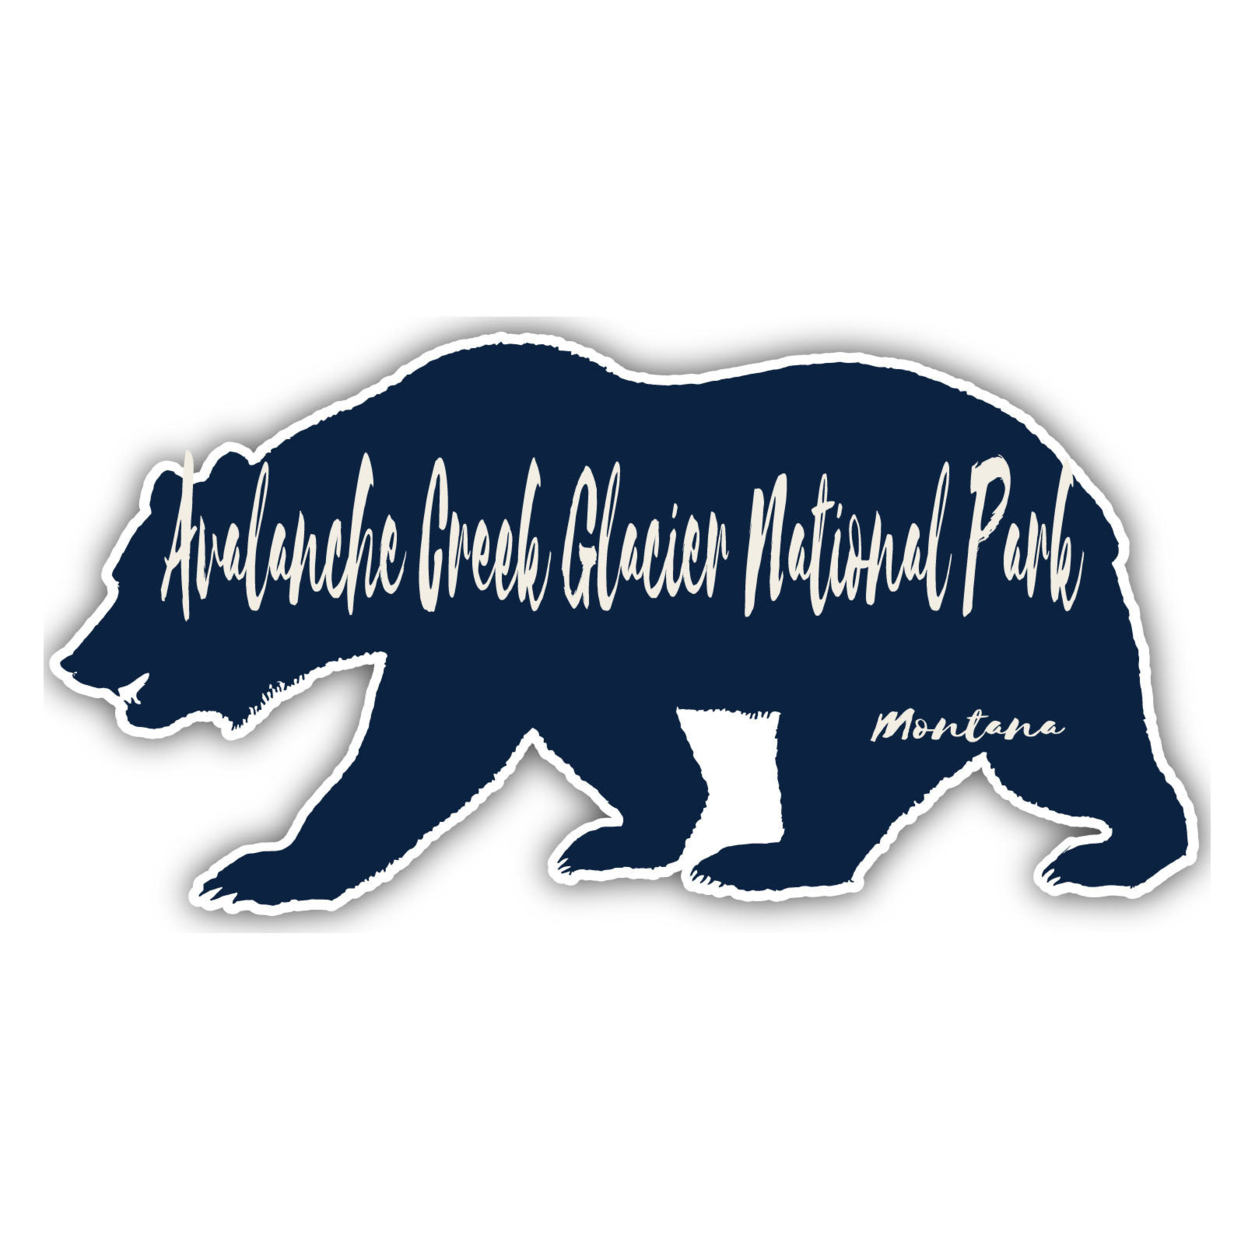 Avalanche Creek Glacier National Park Montana Souvenir Decorative Stickers (Choose Theme And Size) - 4-Pack, 10-Inch, Bear